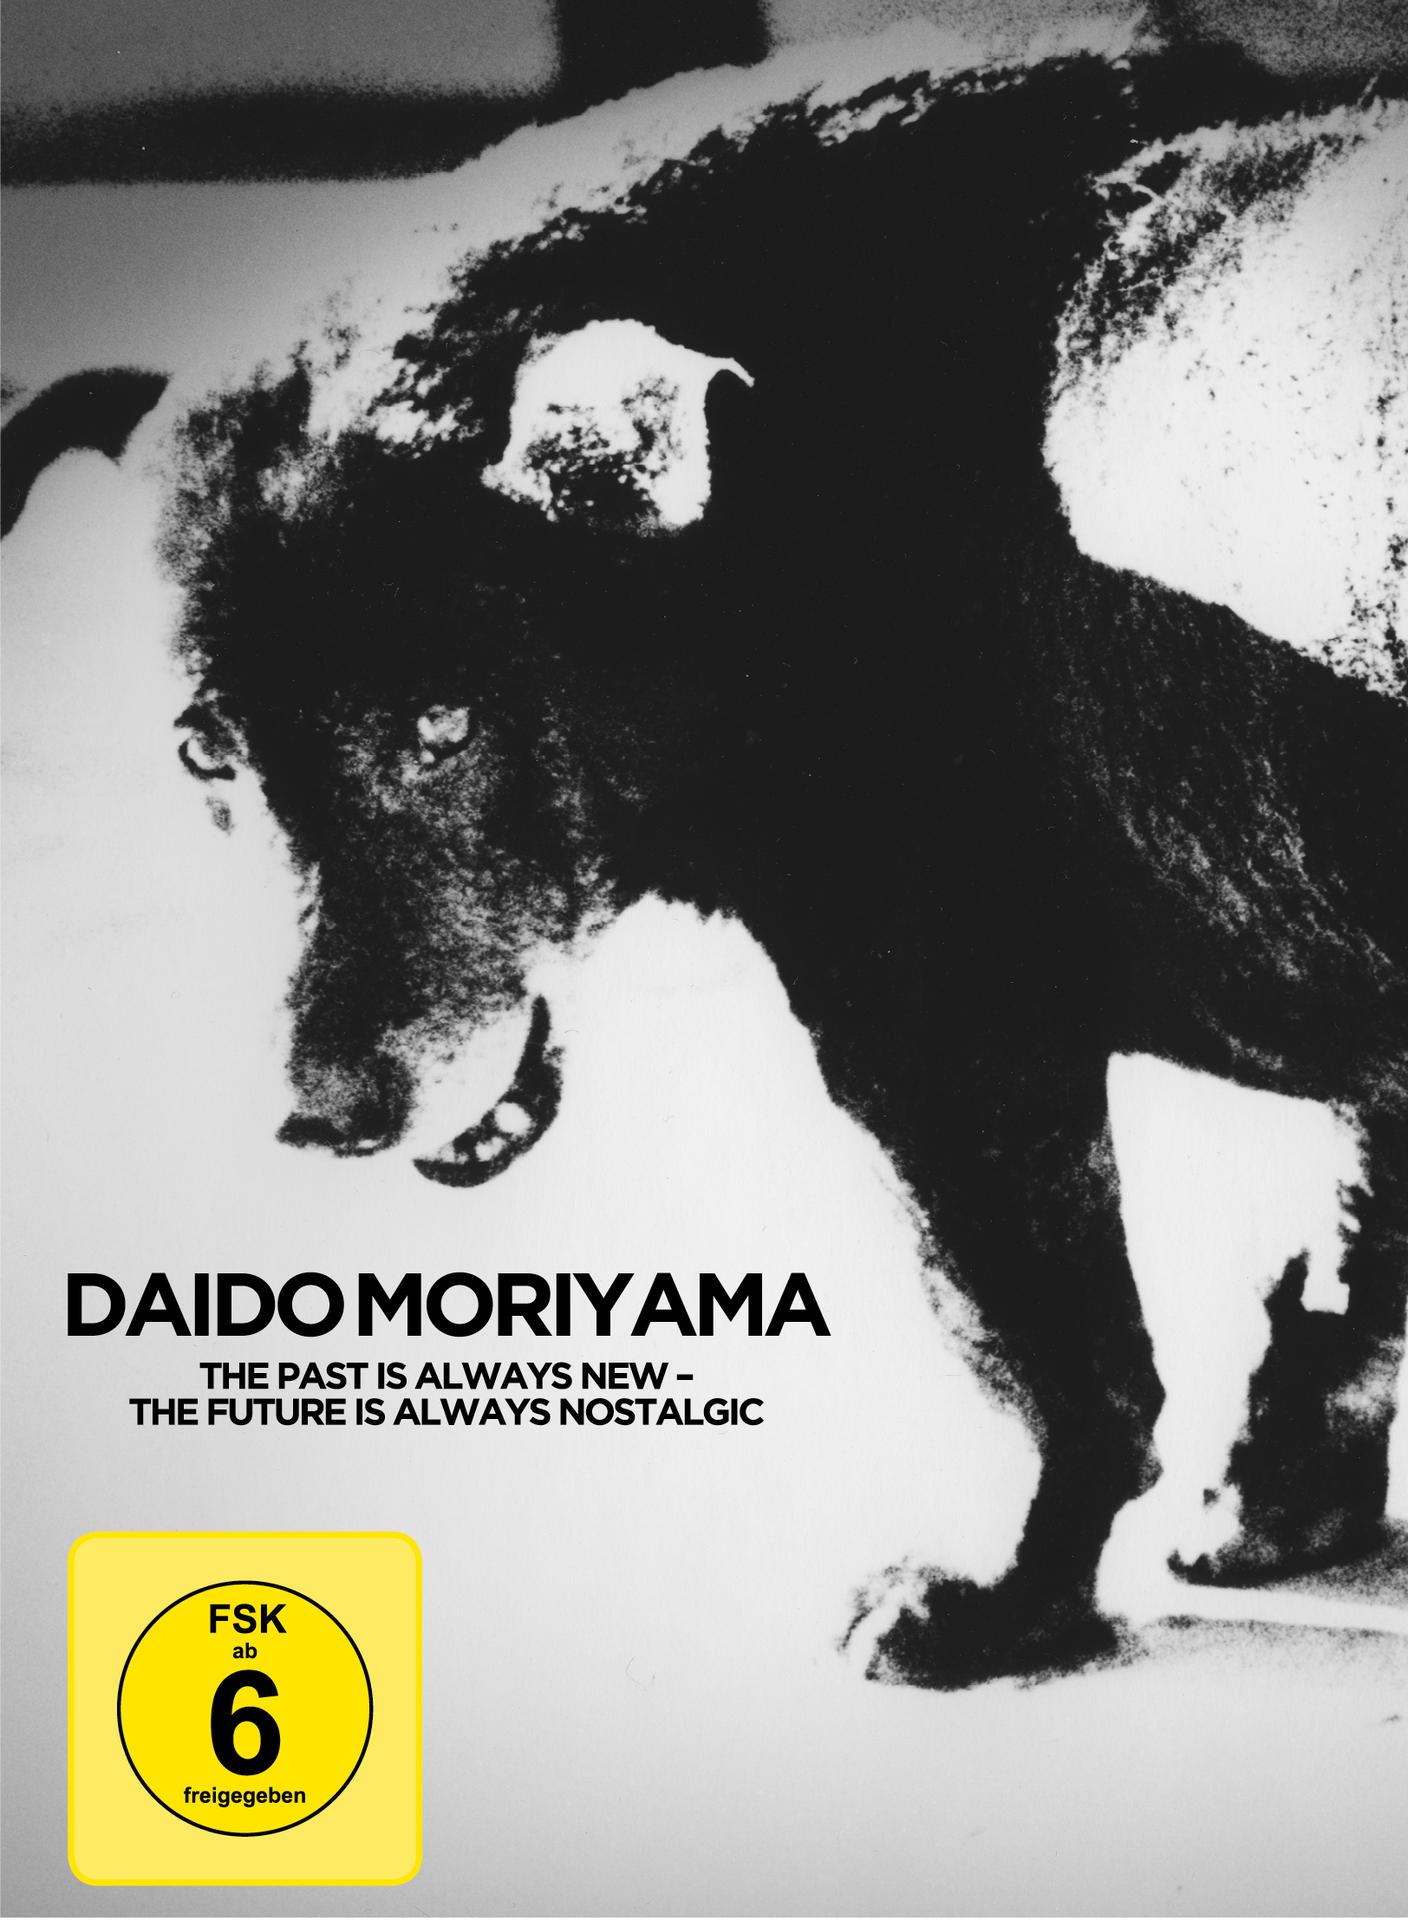 Daido Moriyama new, is nostalgic always is The the always - Past DVD Future